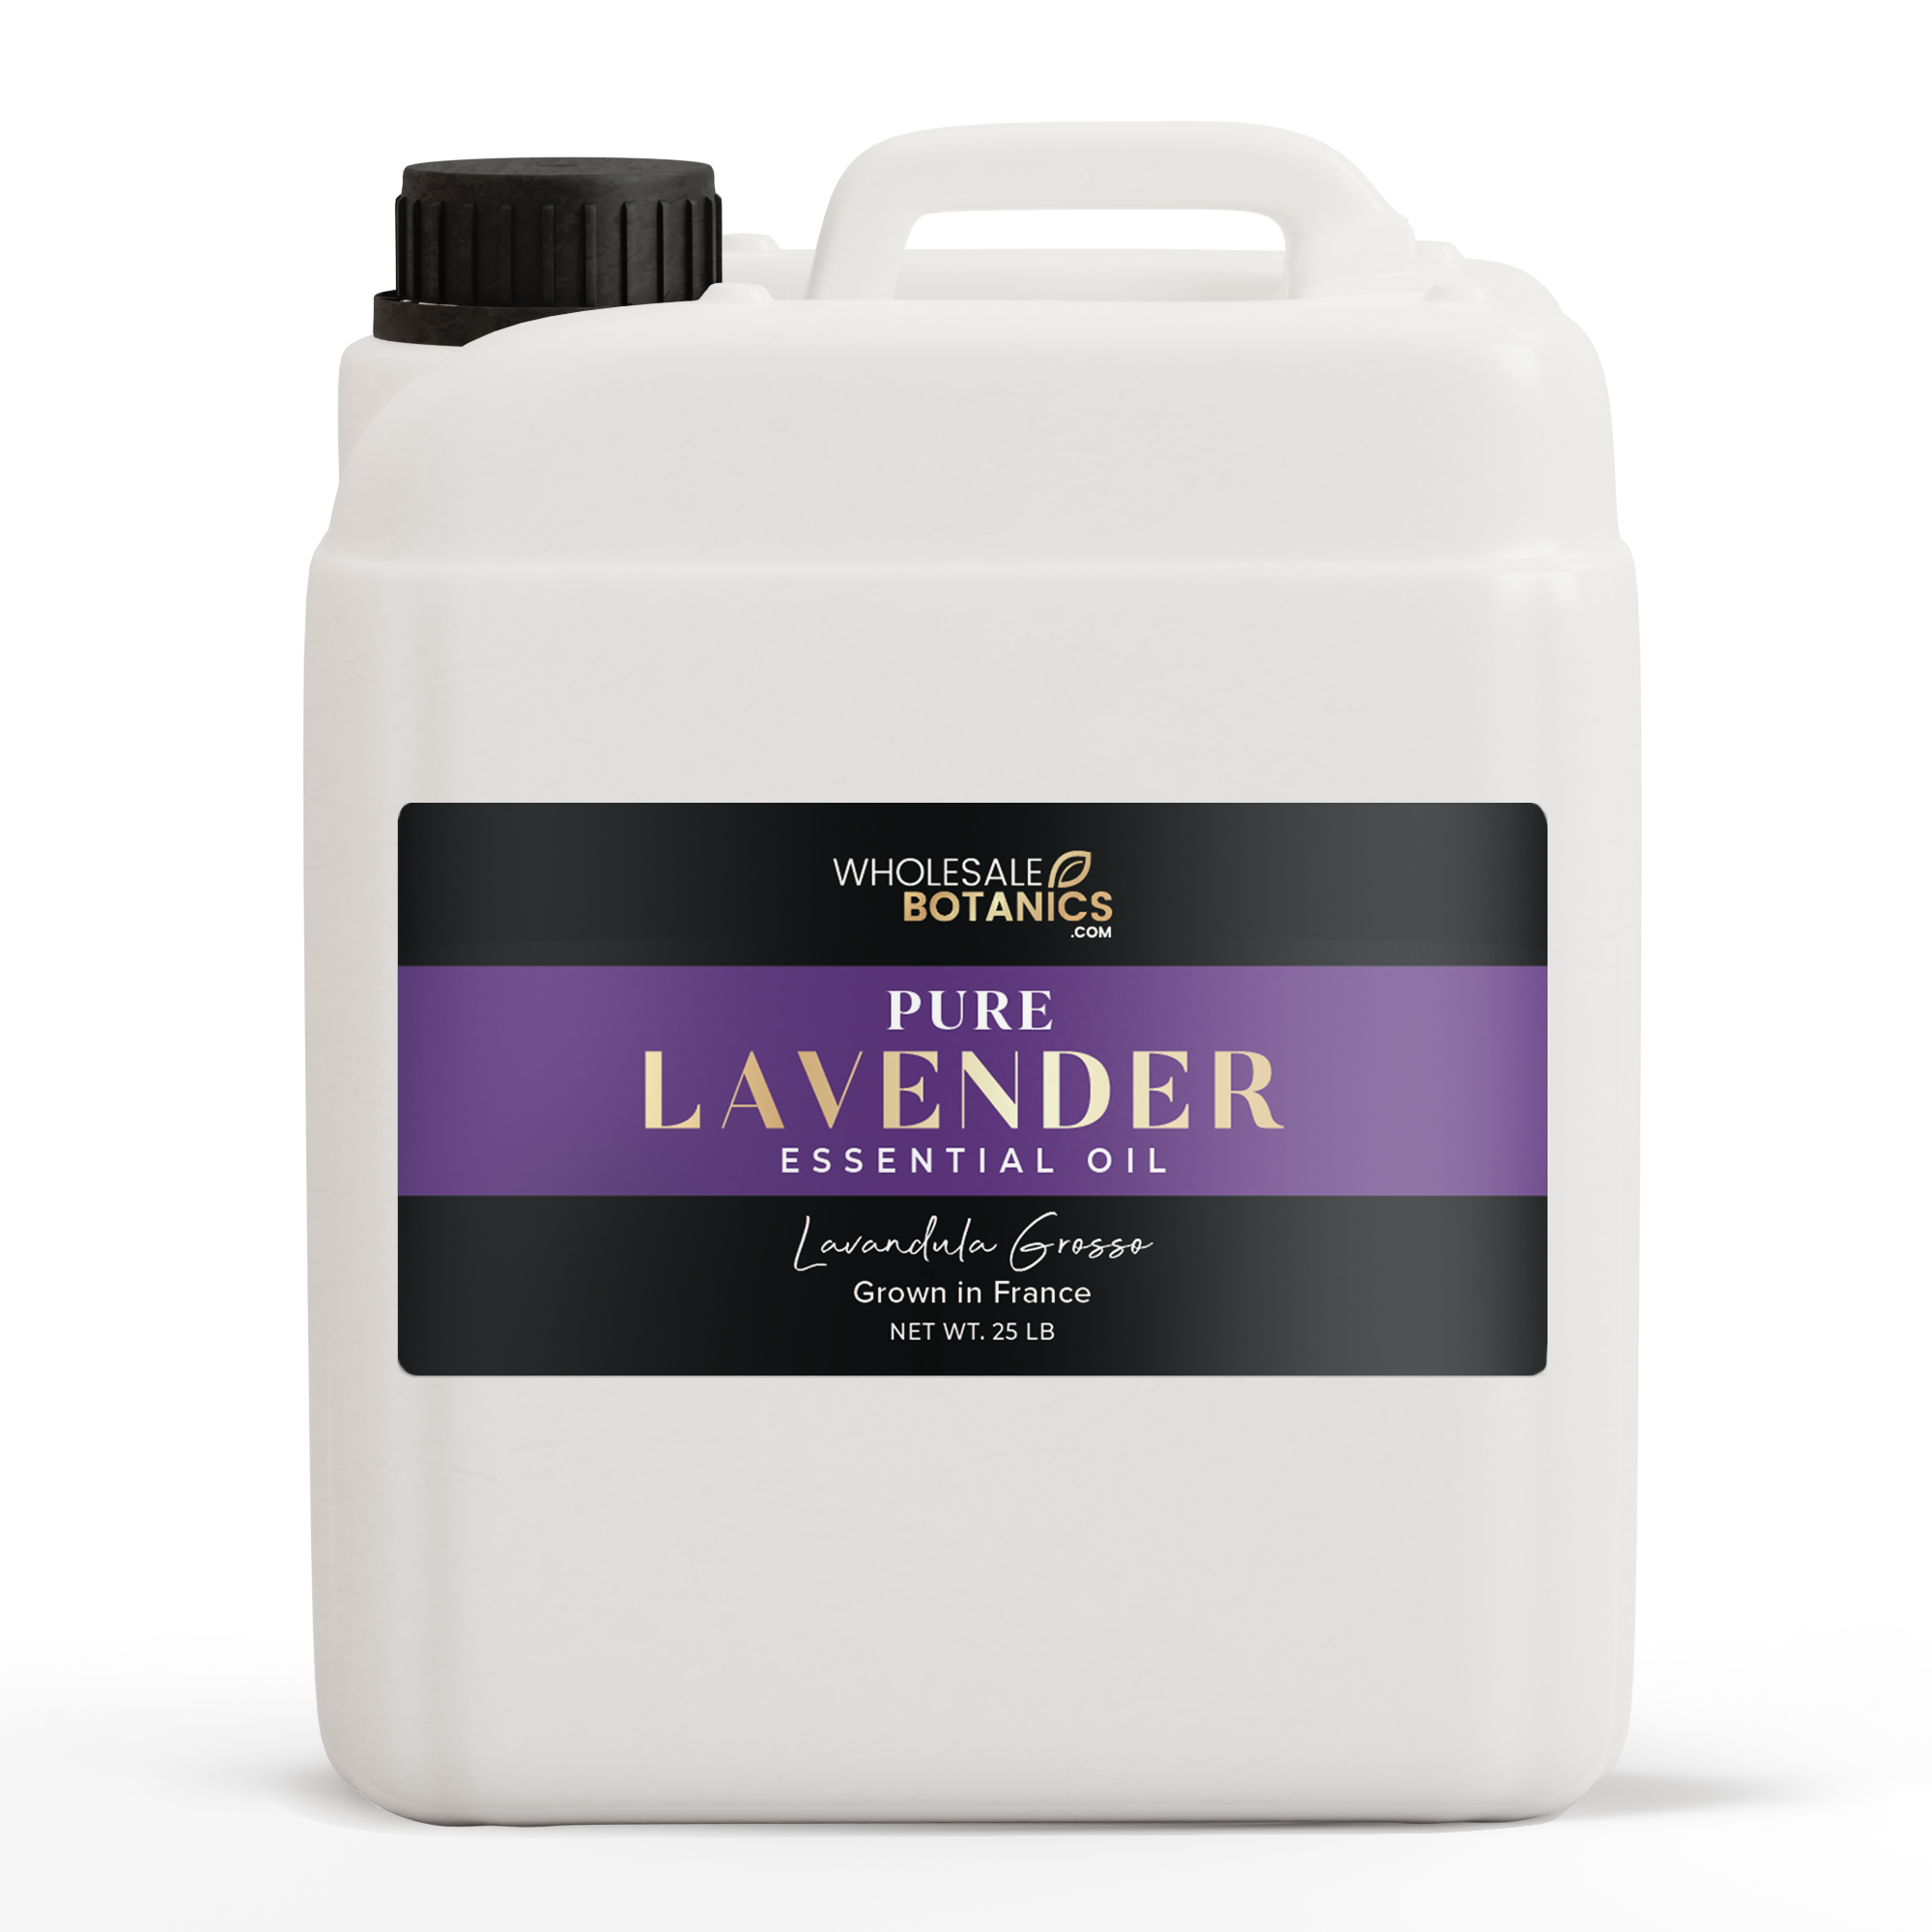 Purity Lavender Essential Oil - Lavandin Grosso - France - 25 lbs